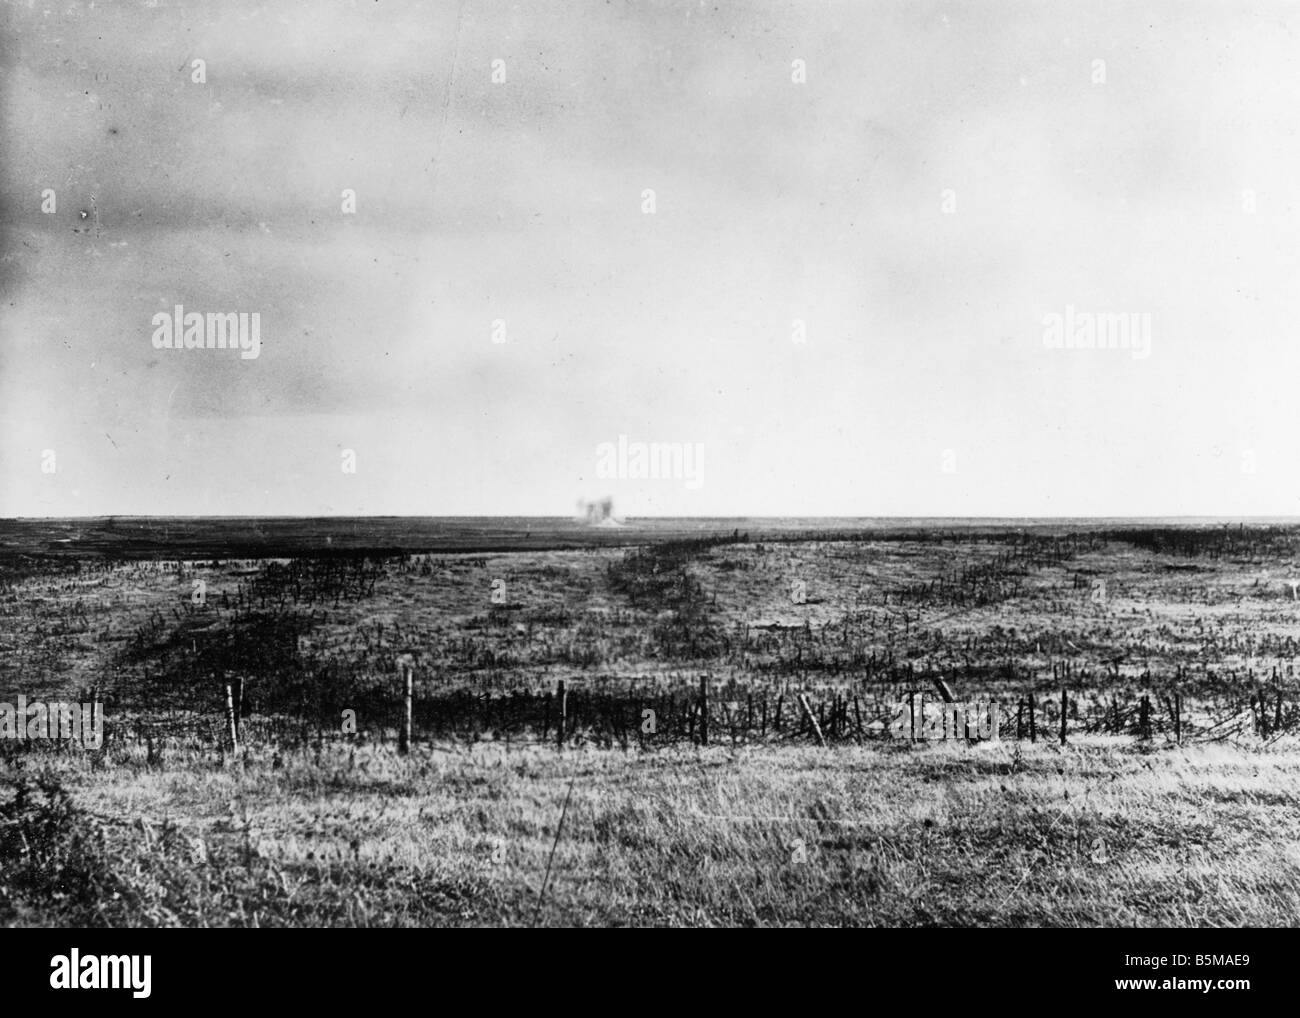 2 G55 W1 1918 1 The Hindenburg Line WWI 1918 History World War I Western Front Devant Prouville Somme La Ligne Hindenburg The Hi Stock Photo